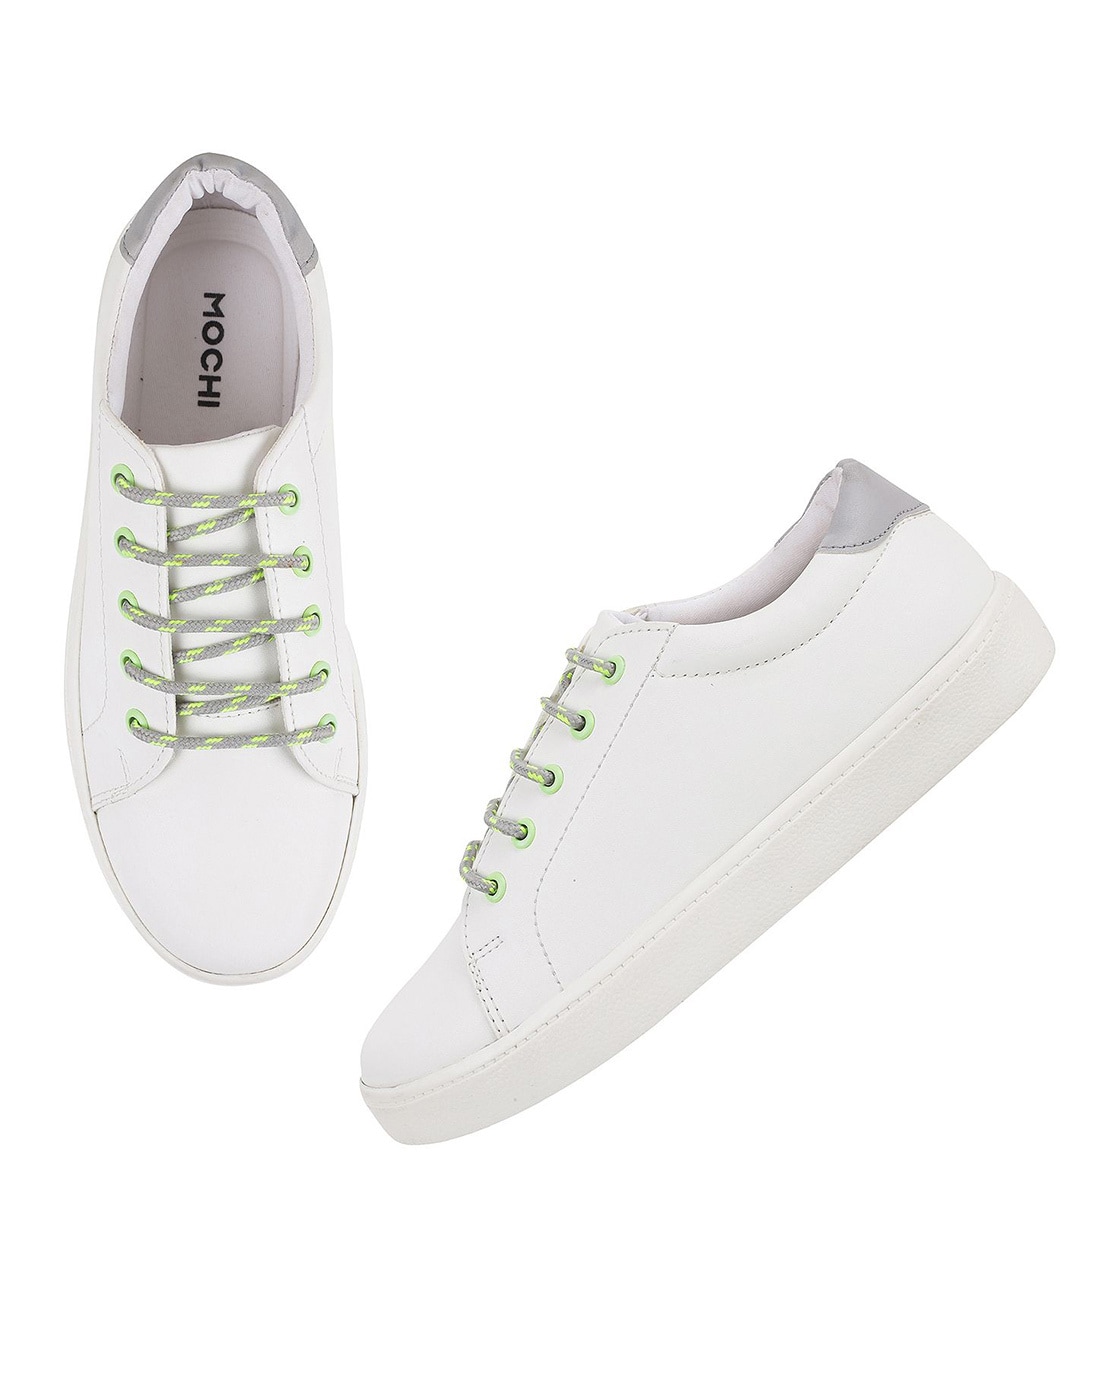 Buy Genx Men White Casual Sneakers Online | SKU: 71-8633-16-40 – Mochi Shoes